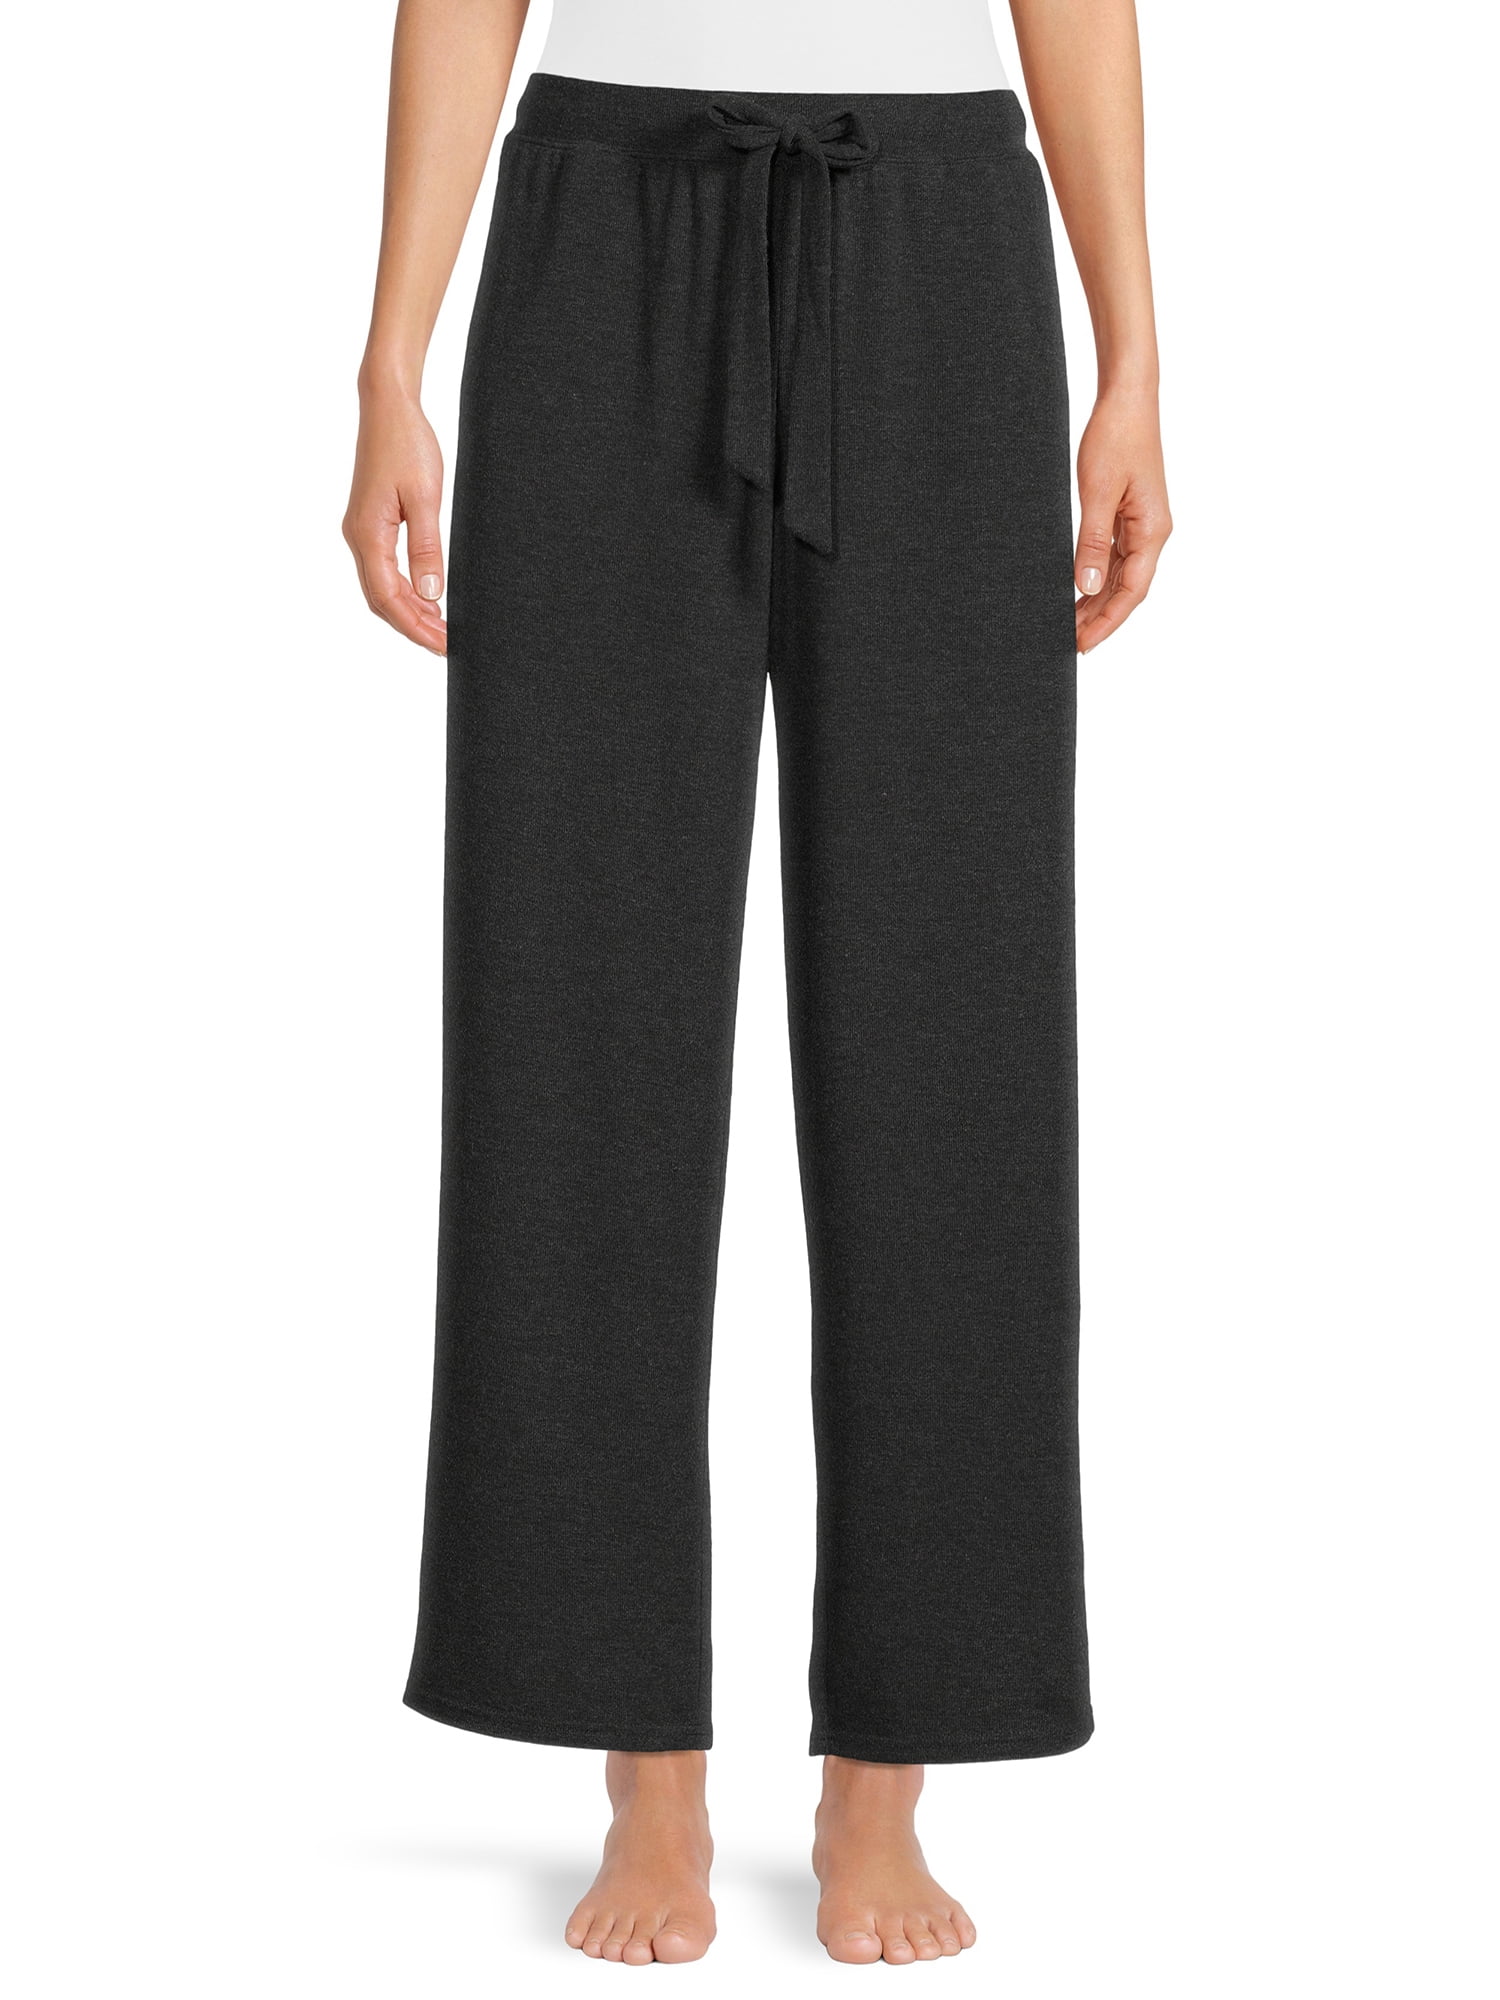 Joyspun Women's Hacci Solid Sleep Pants, Sizes to 3X - Walmart.com